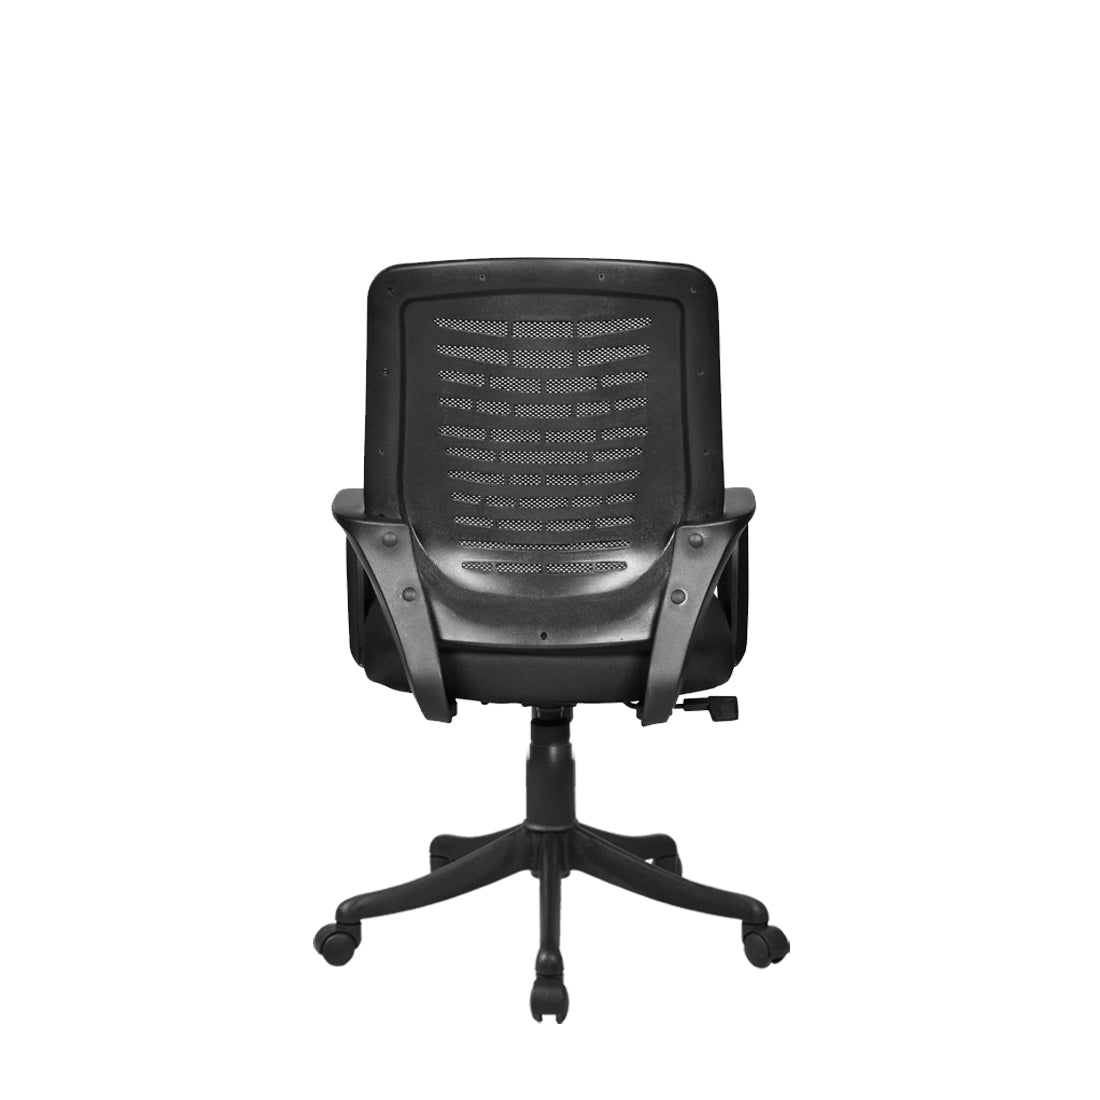 Fliq Mesh Back Chair Workstation chairs - makemychairs